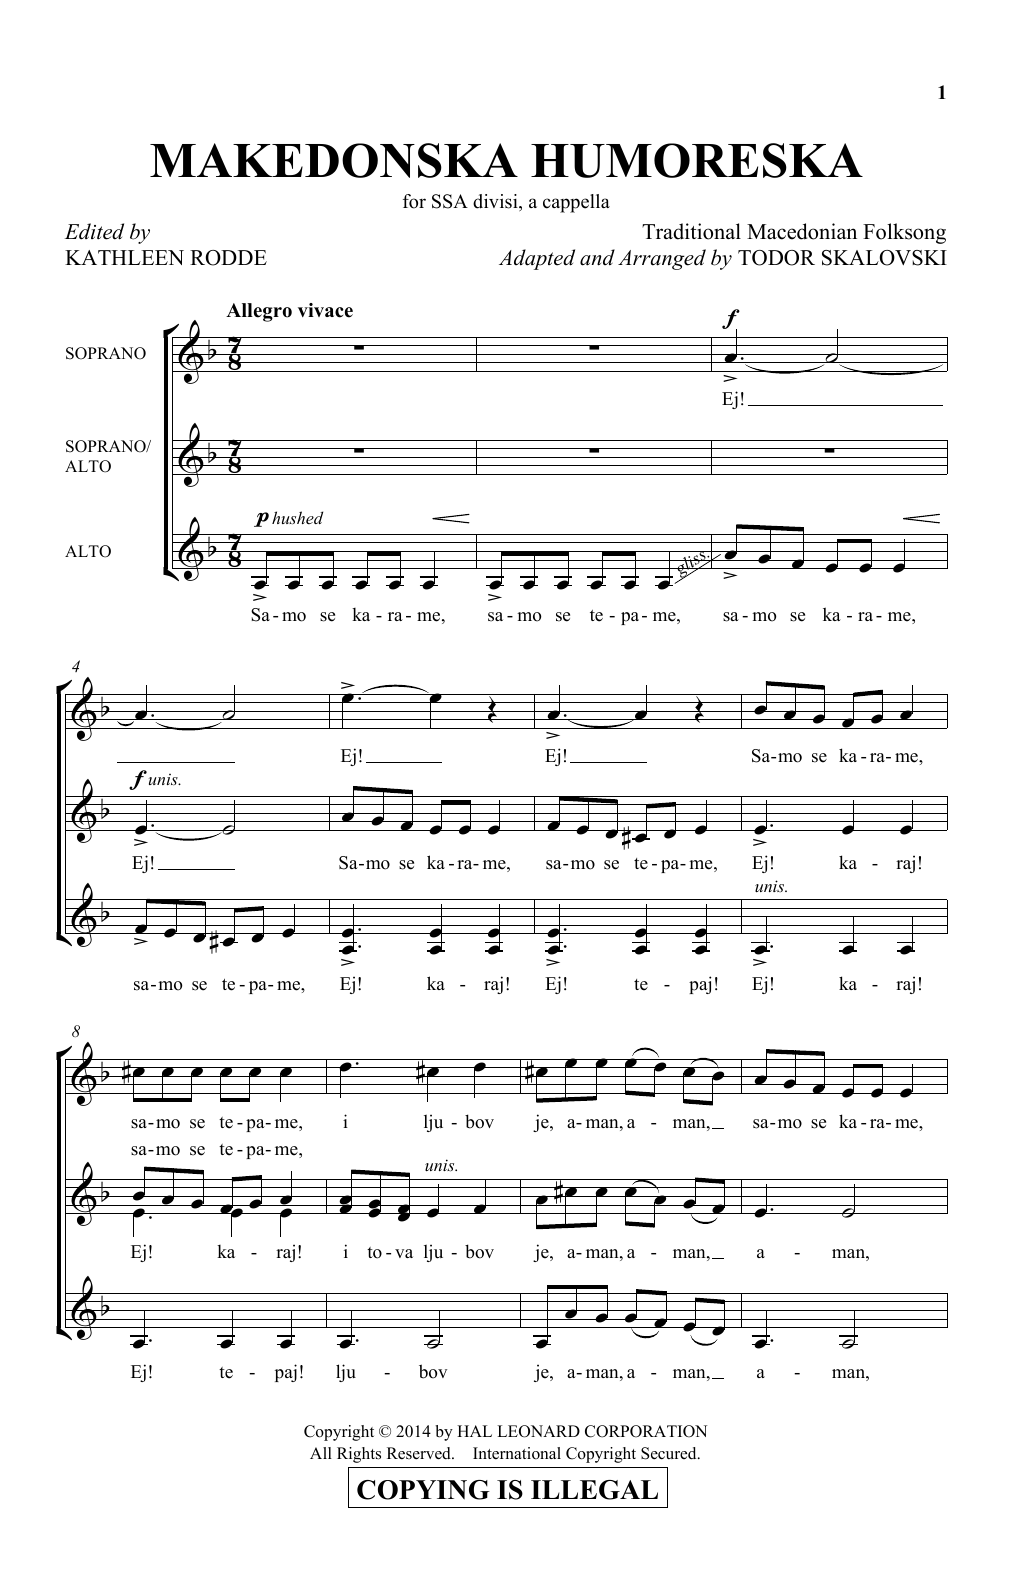 Kathleen Rodde Makedonska Humoreska Sheet Music Notes & Chords for SSA - Download or Print PDF